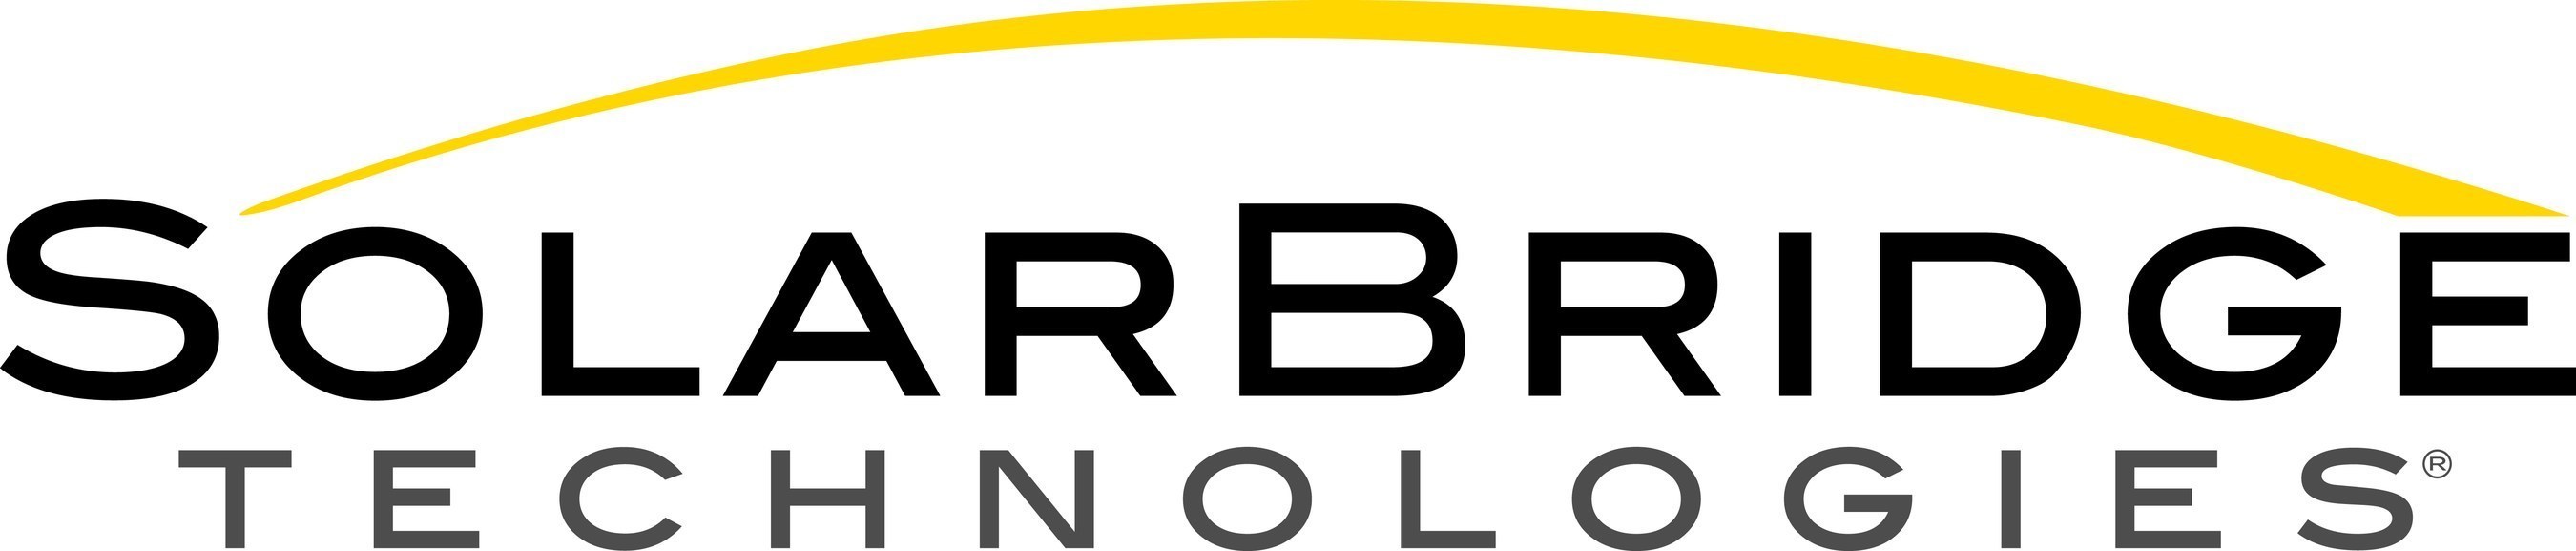 SolarBridge Technologies Logo (PRNewsFoto/SolarBridge Technologies)